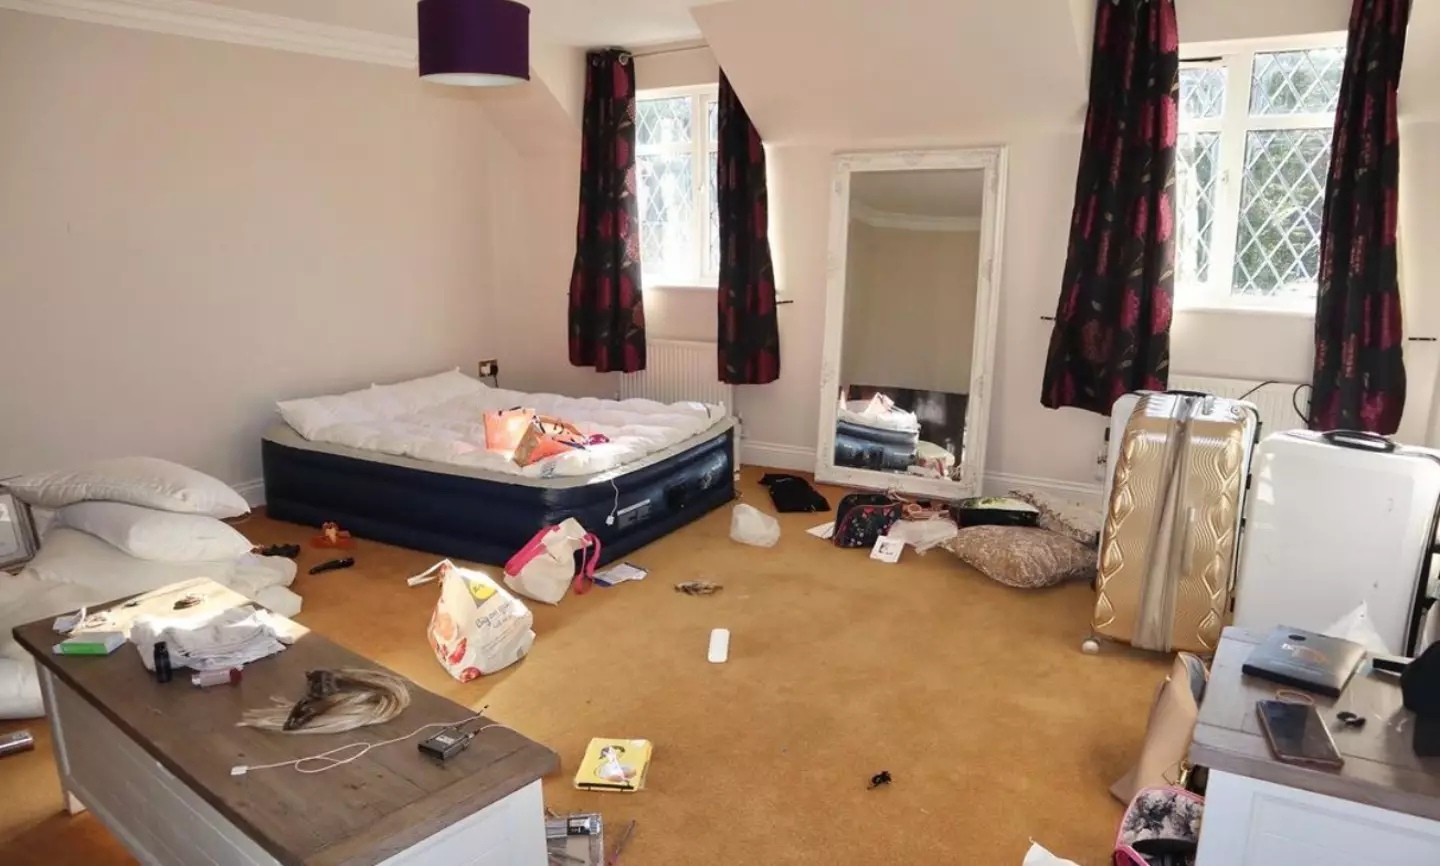 Faye's messy bedroom raised a few eyebrows (